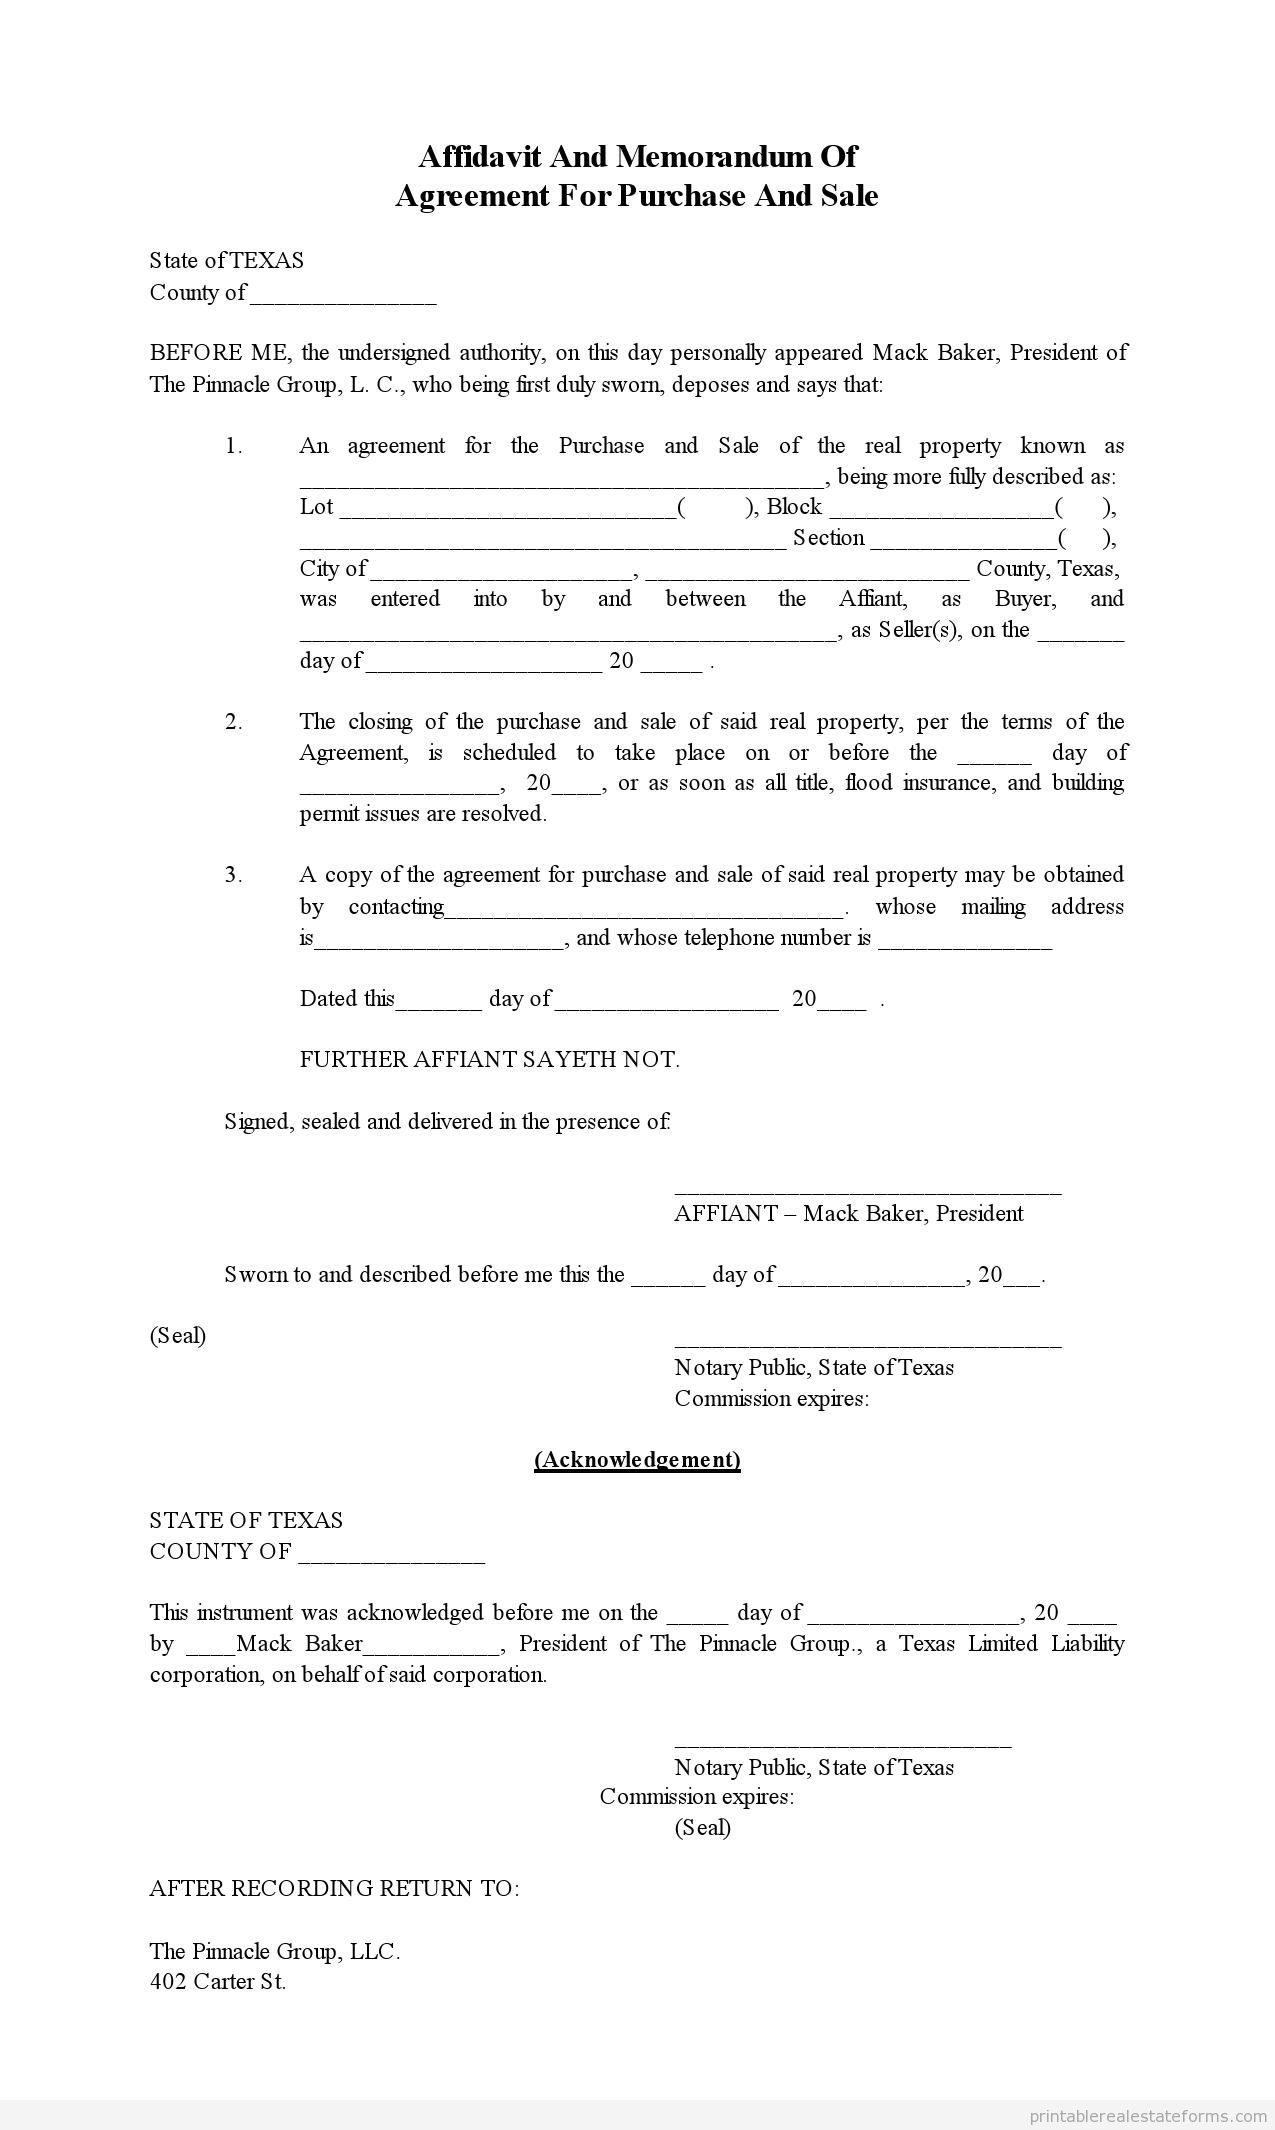 Sample Printable Affidavit Of Memorandum For Purchase And Sale 2 - Free Printable Real Estate Purchase Agreement